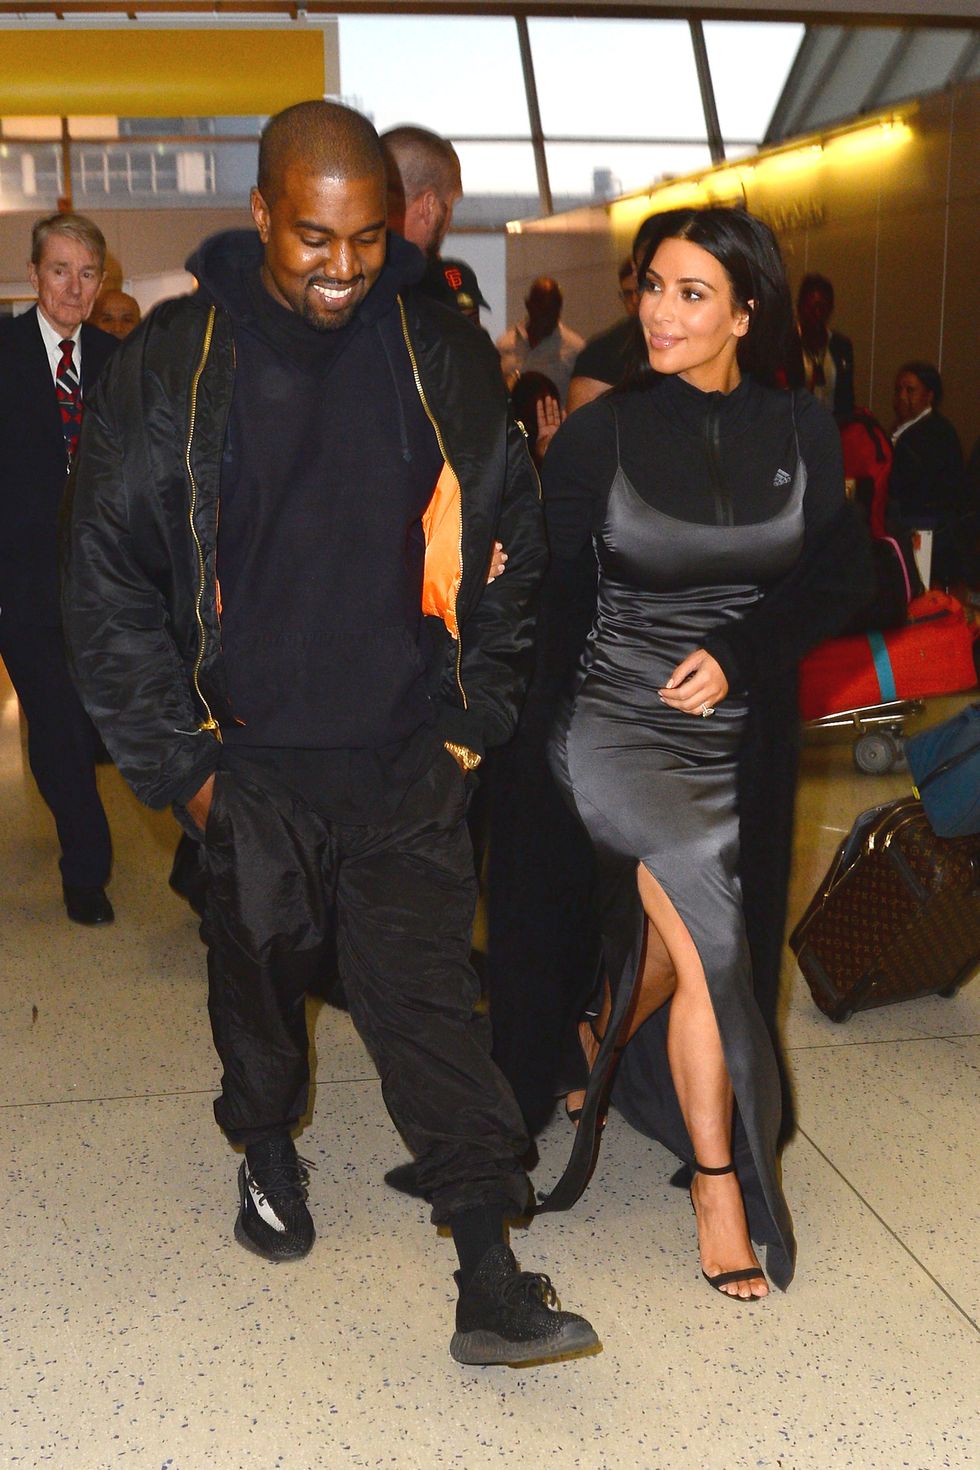 Kim Kardashian's handbag wardrobe is truly a sight to behold